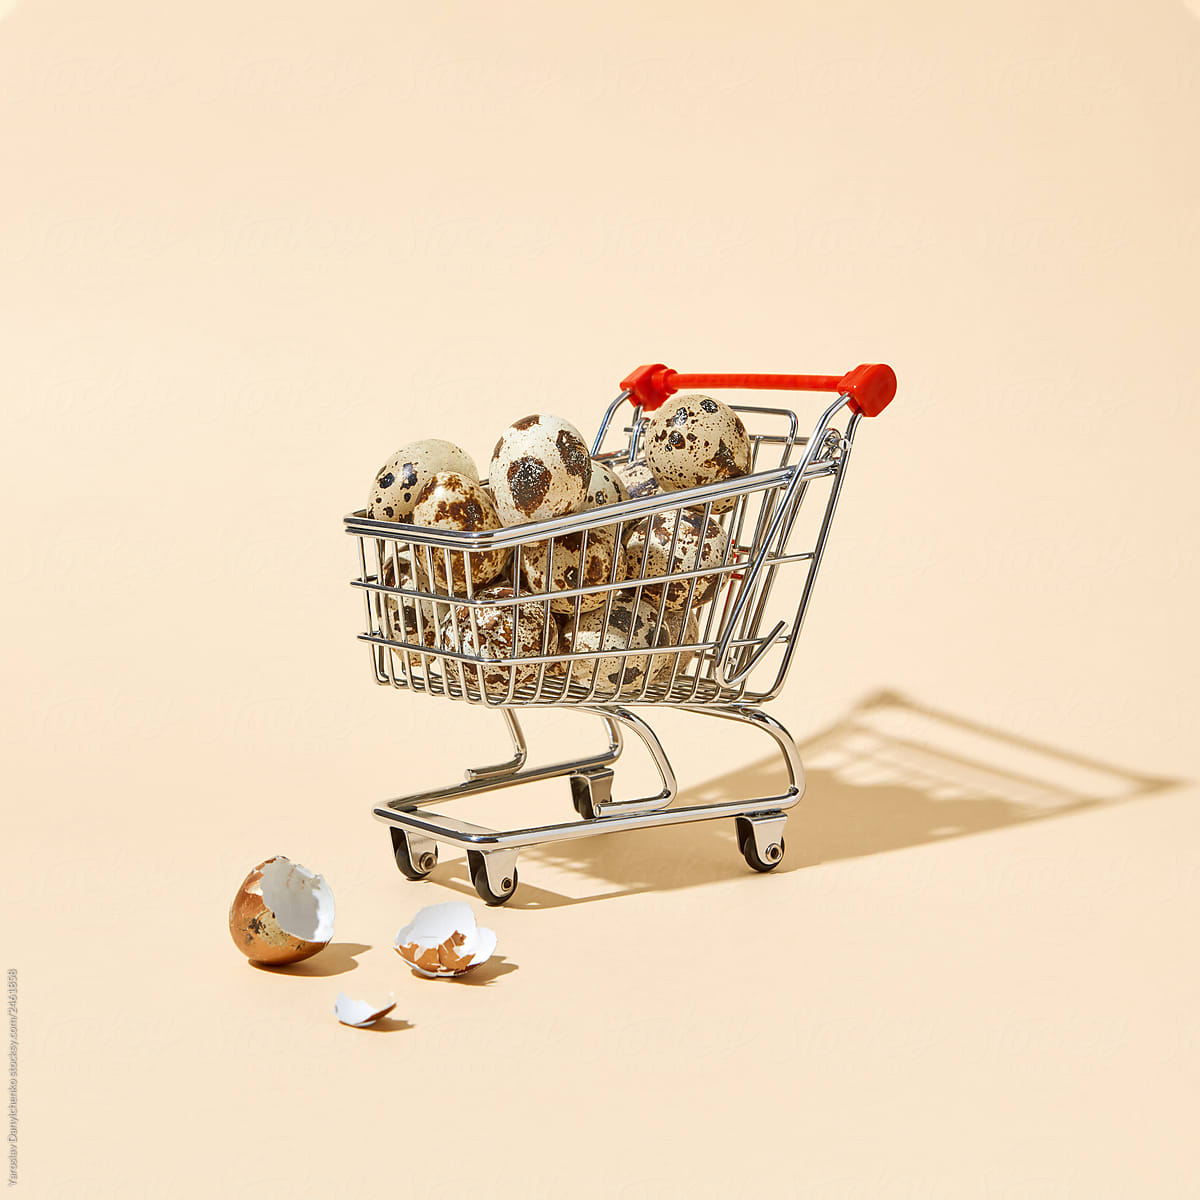 Quail eggs in a shopping cart and broken shells